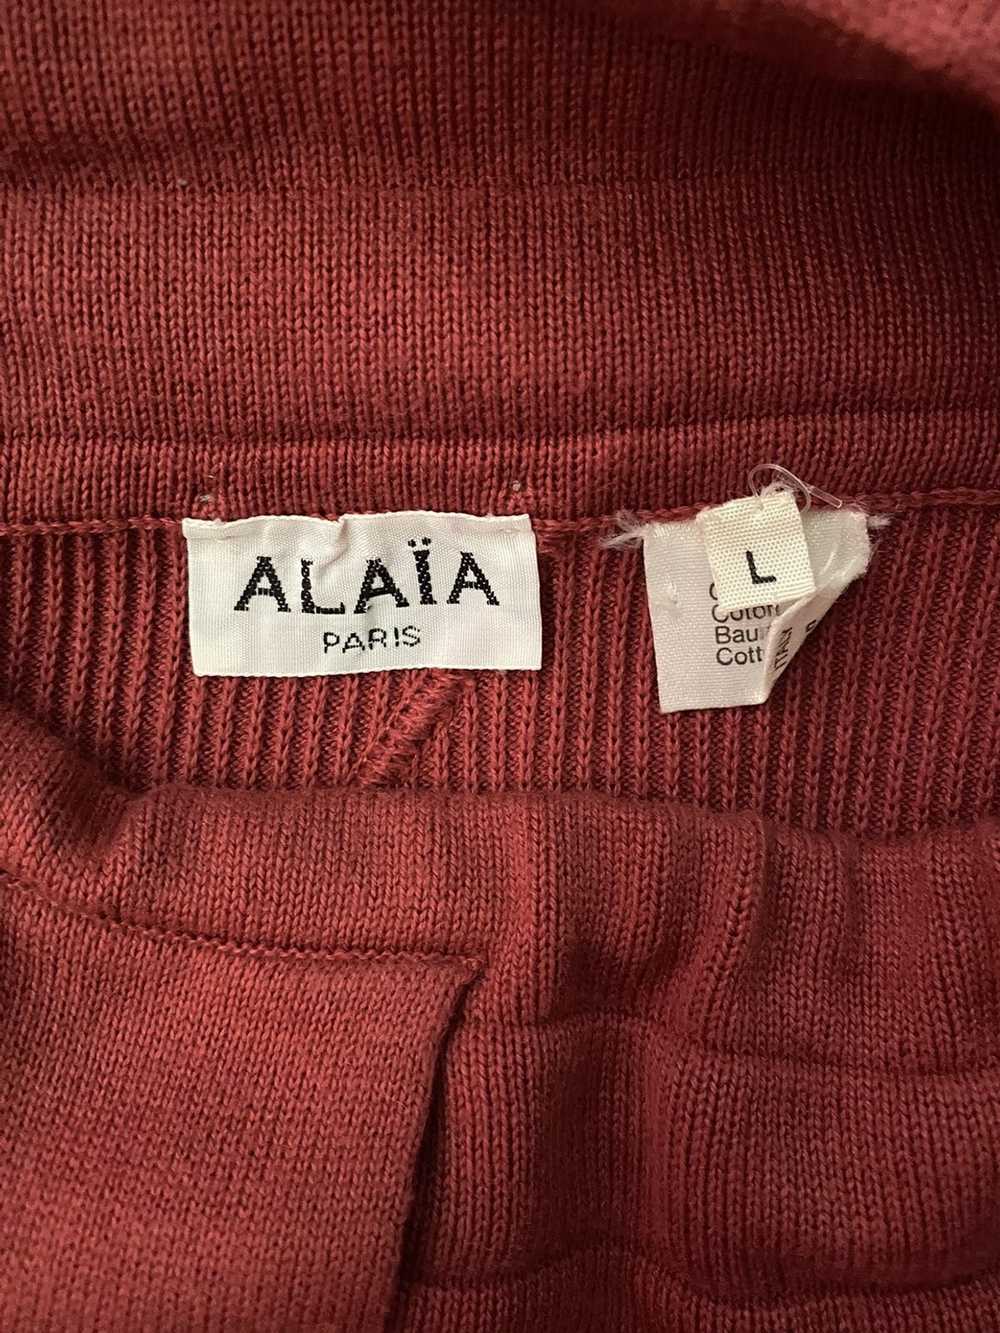 Alaia Vintage Alaïa Paris Zipper Skirt 1986 - image 7